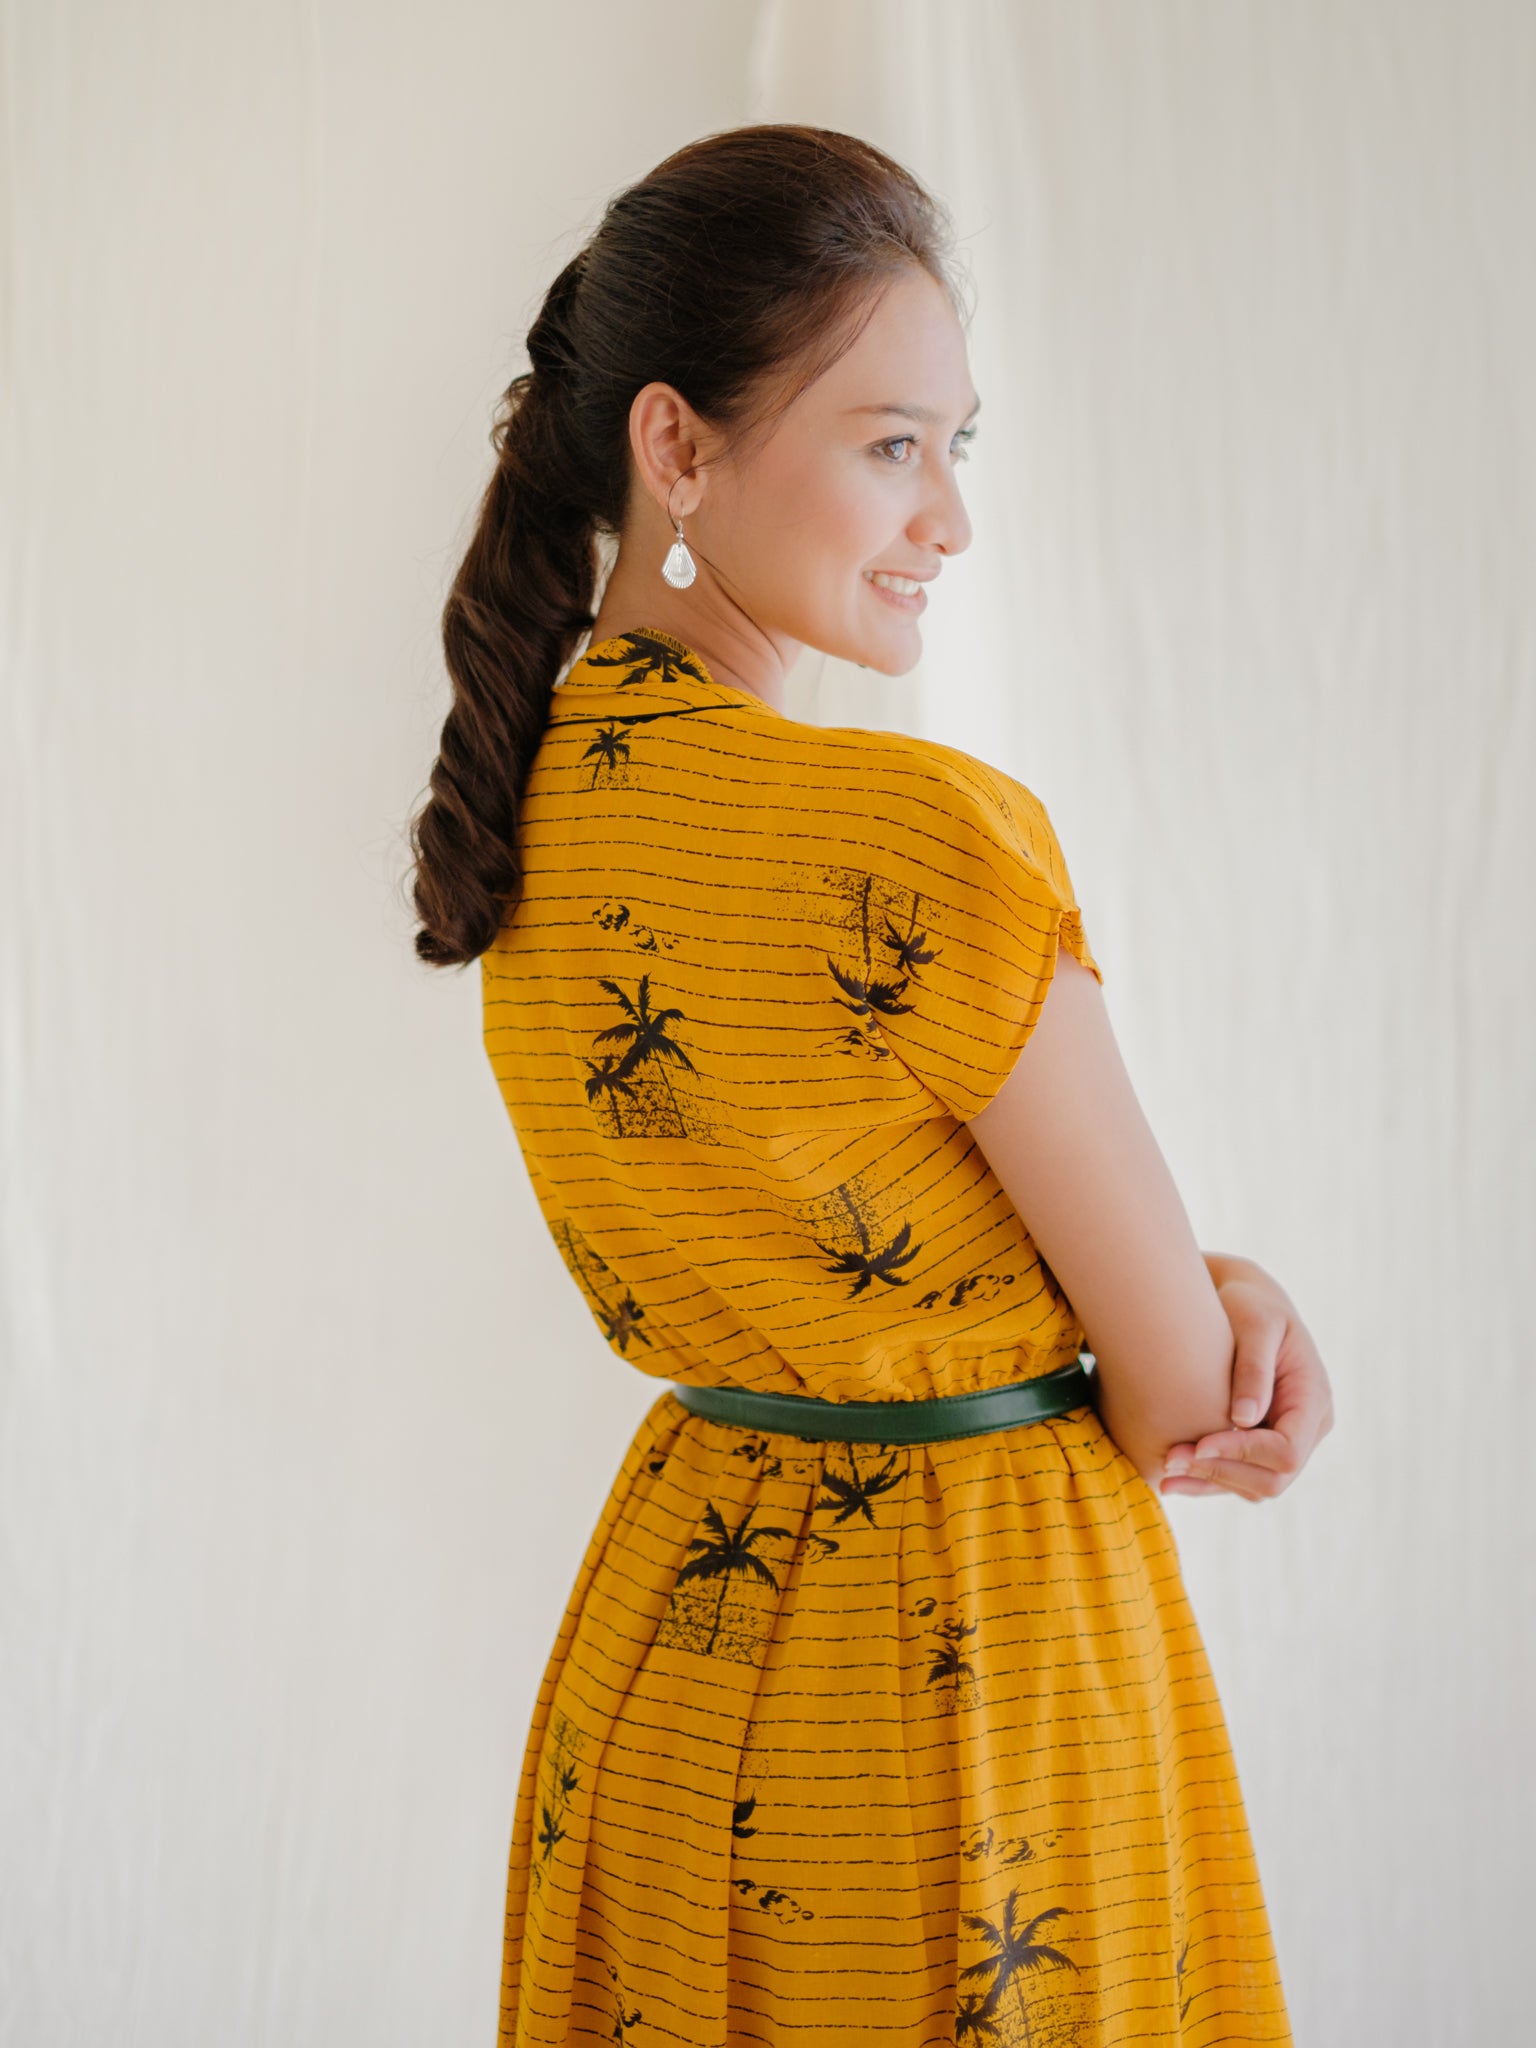 Mustard yellow palm tree vintage dress